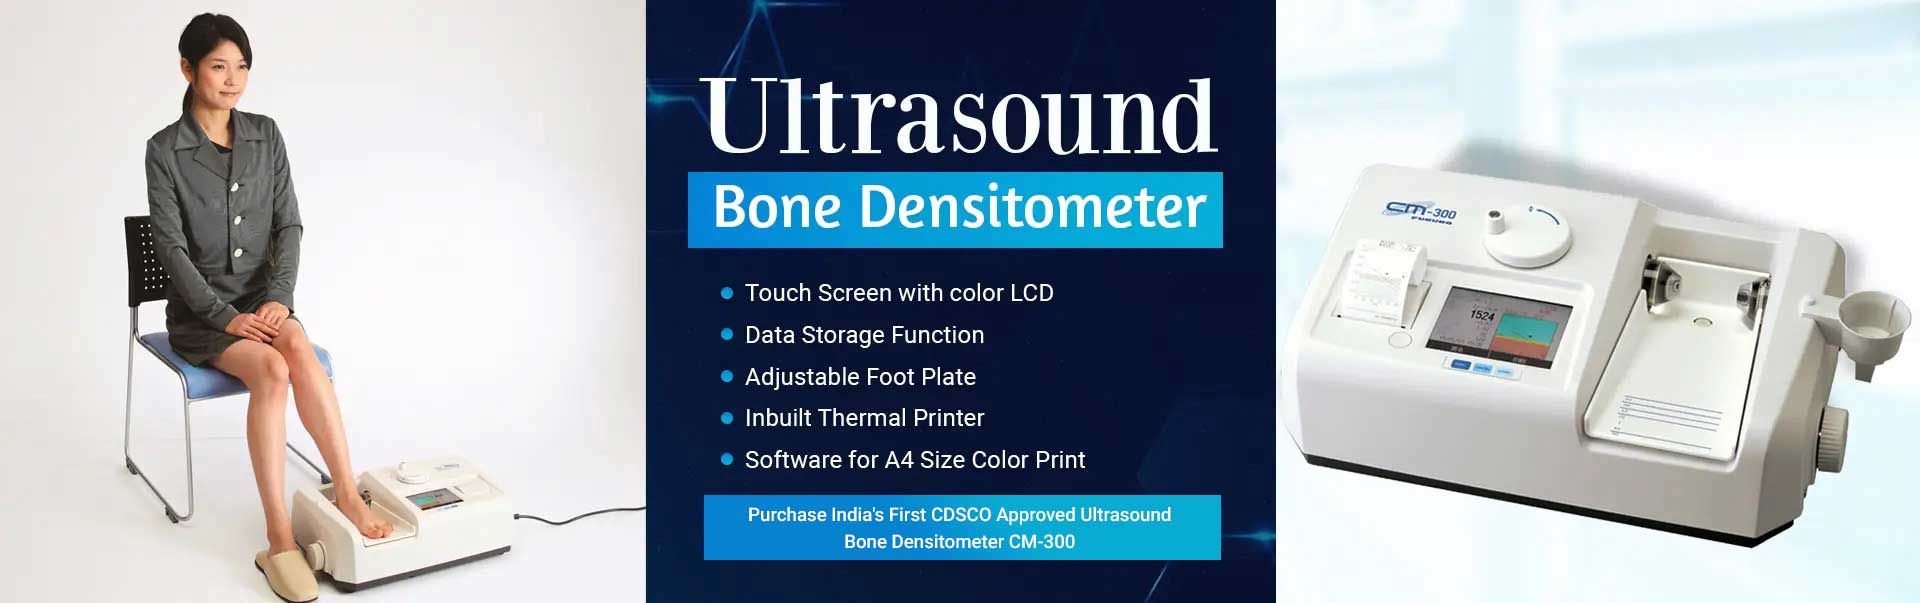 Ultrasound Bone Densitometer Manufacturers in Coimbatore